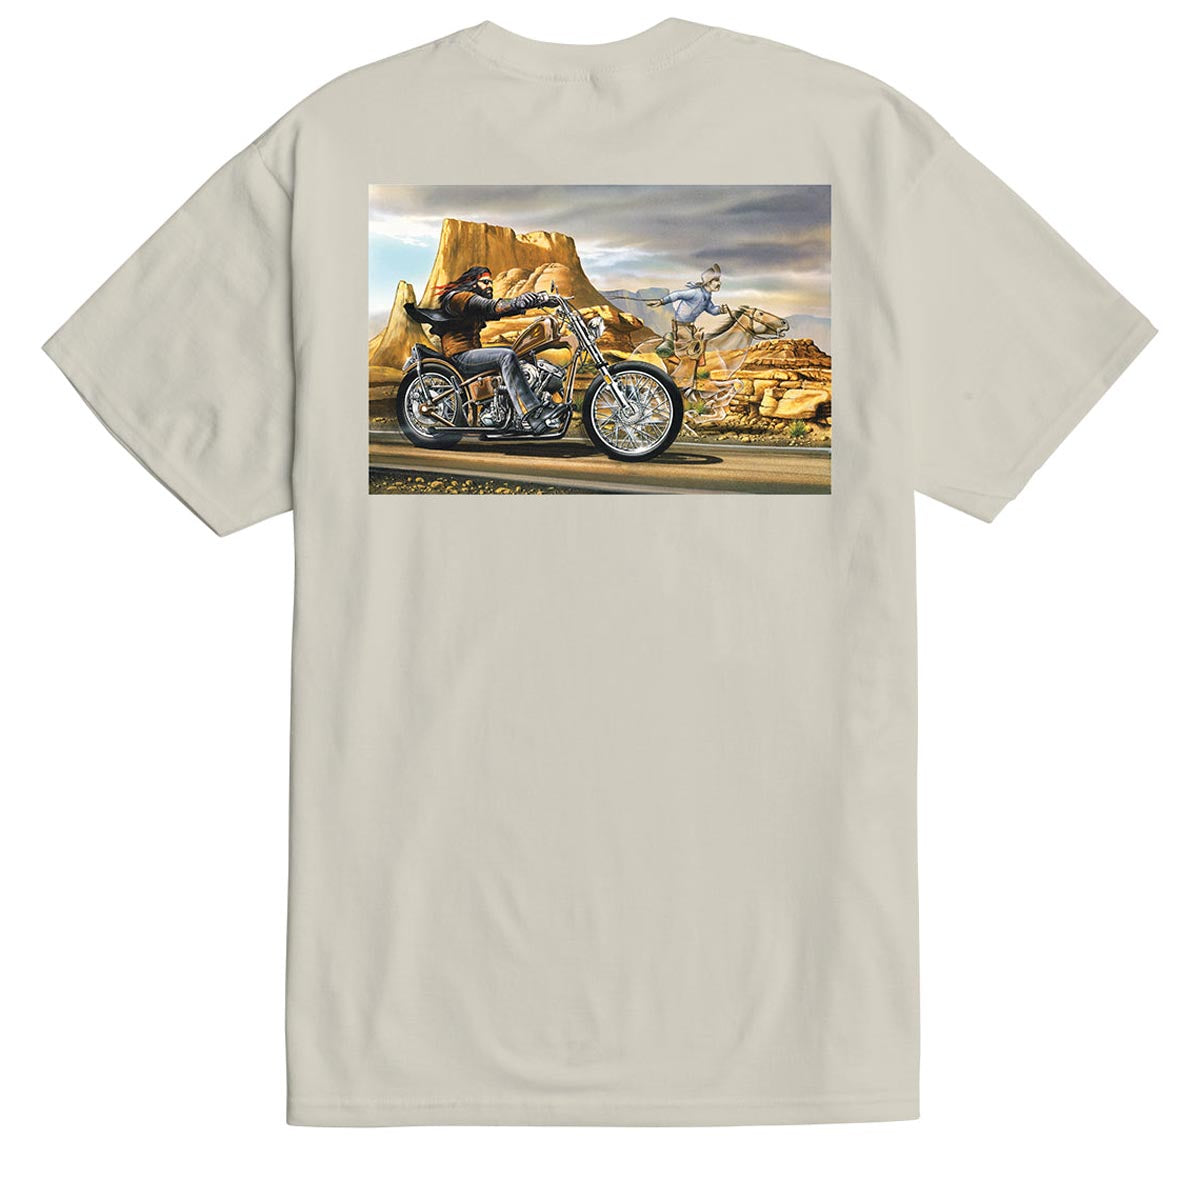 Loser Machine Ghost Rider T-Shirt - Cream image 1